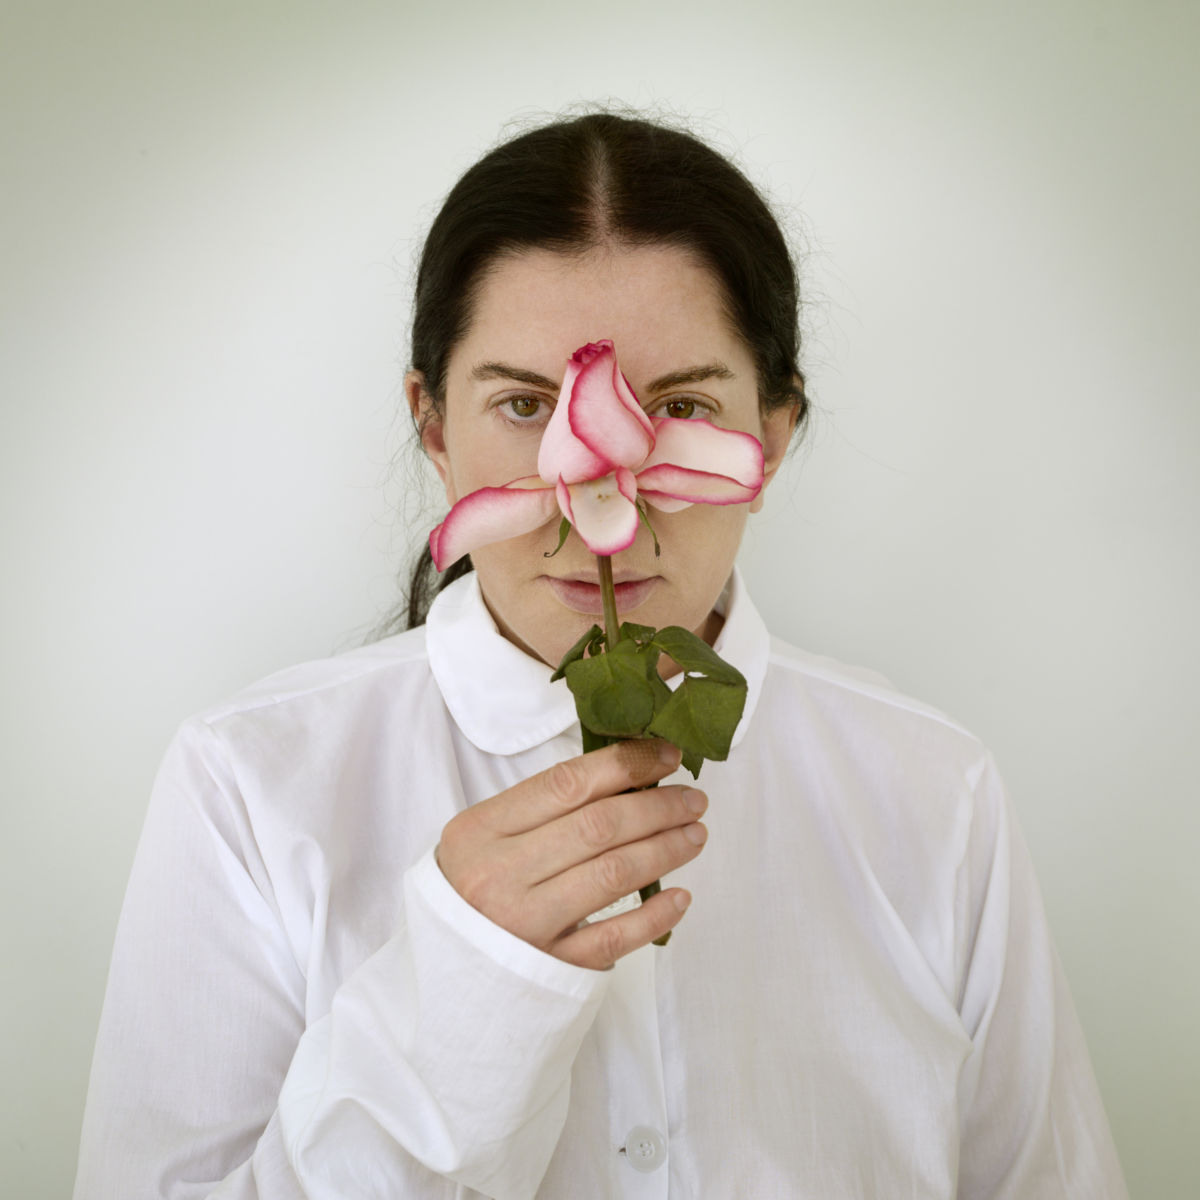 ArtInternational2014-Marina Abramović - Artist Portrait with a Rose, 2013